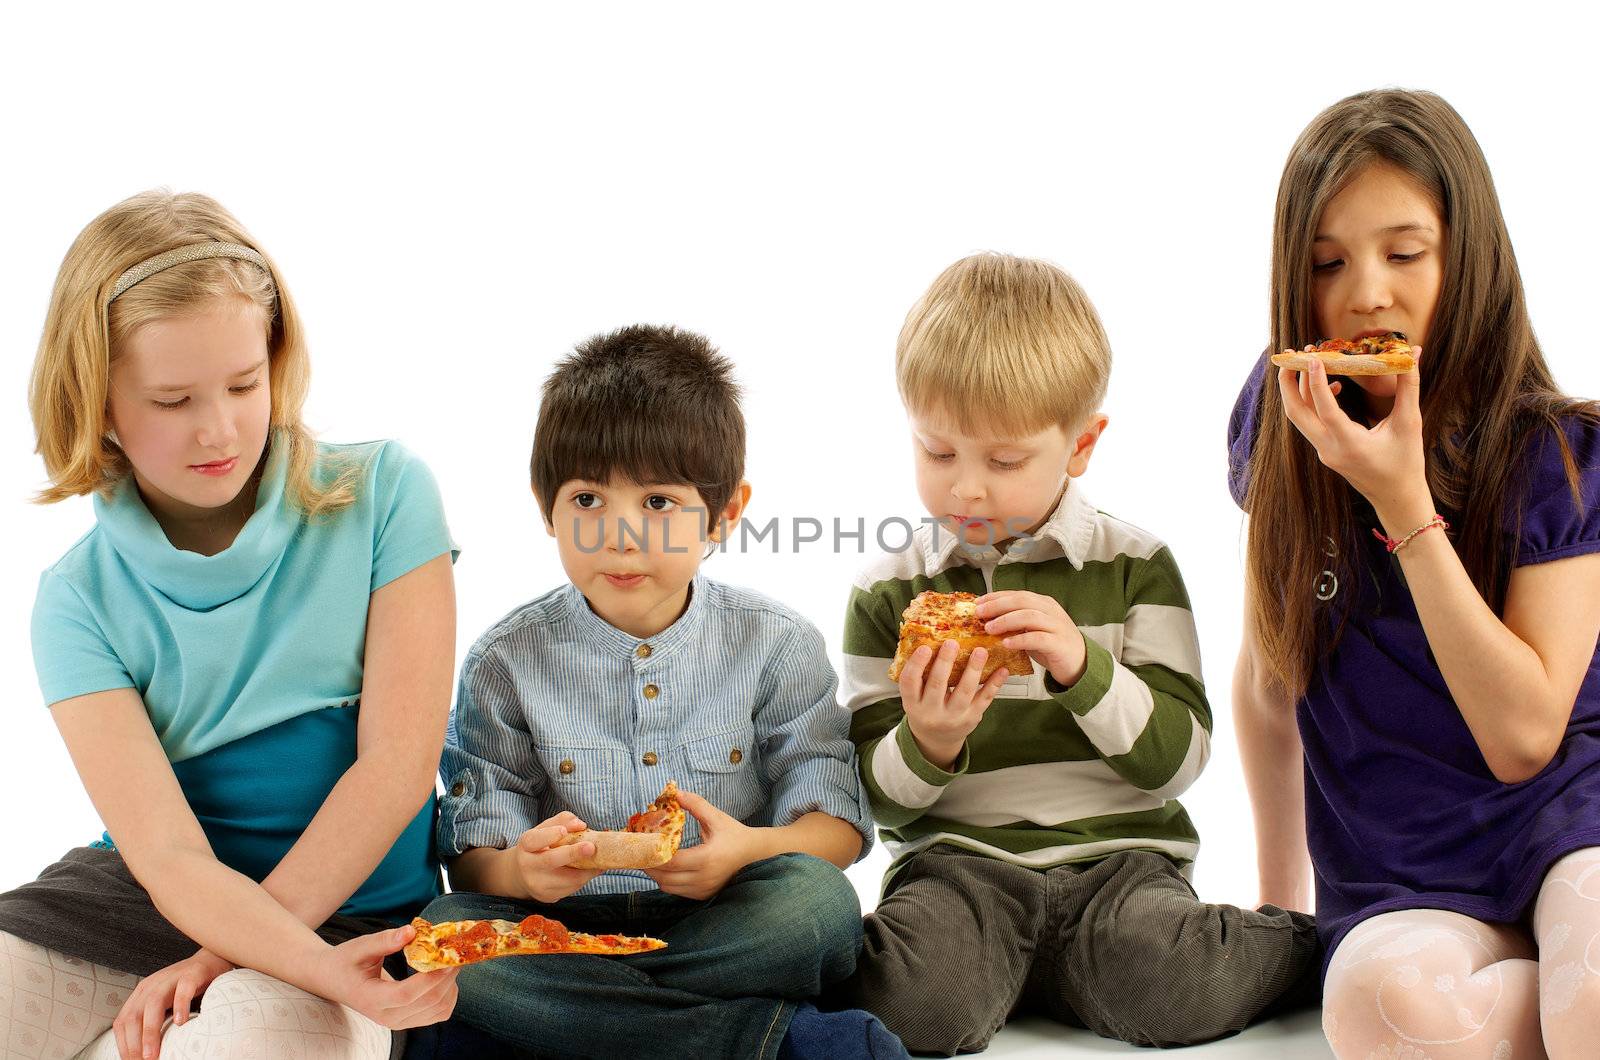 Children Eating Pizza by zhekos